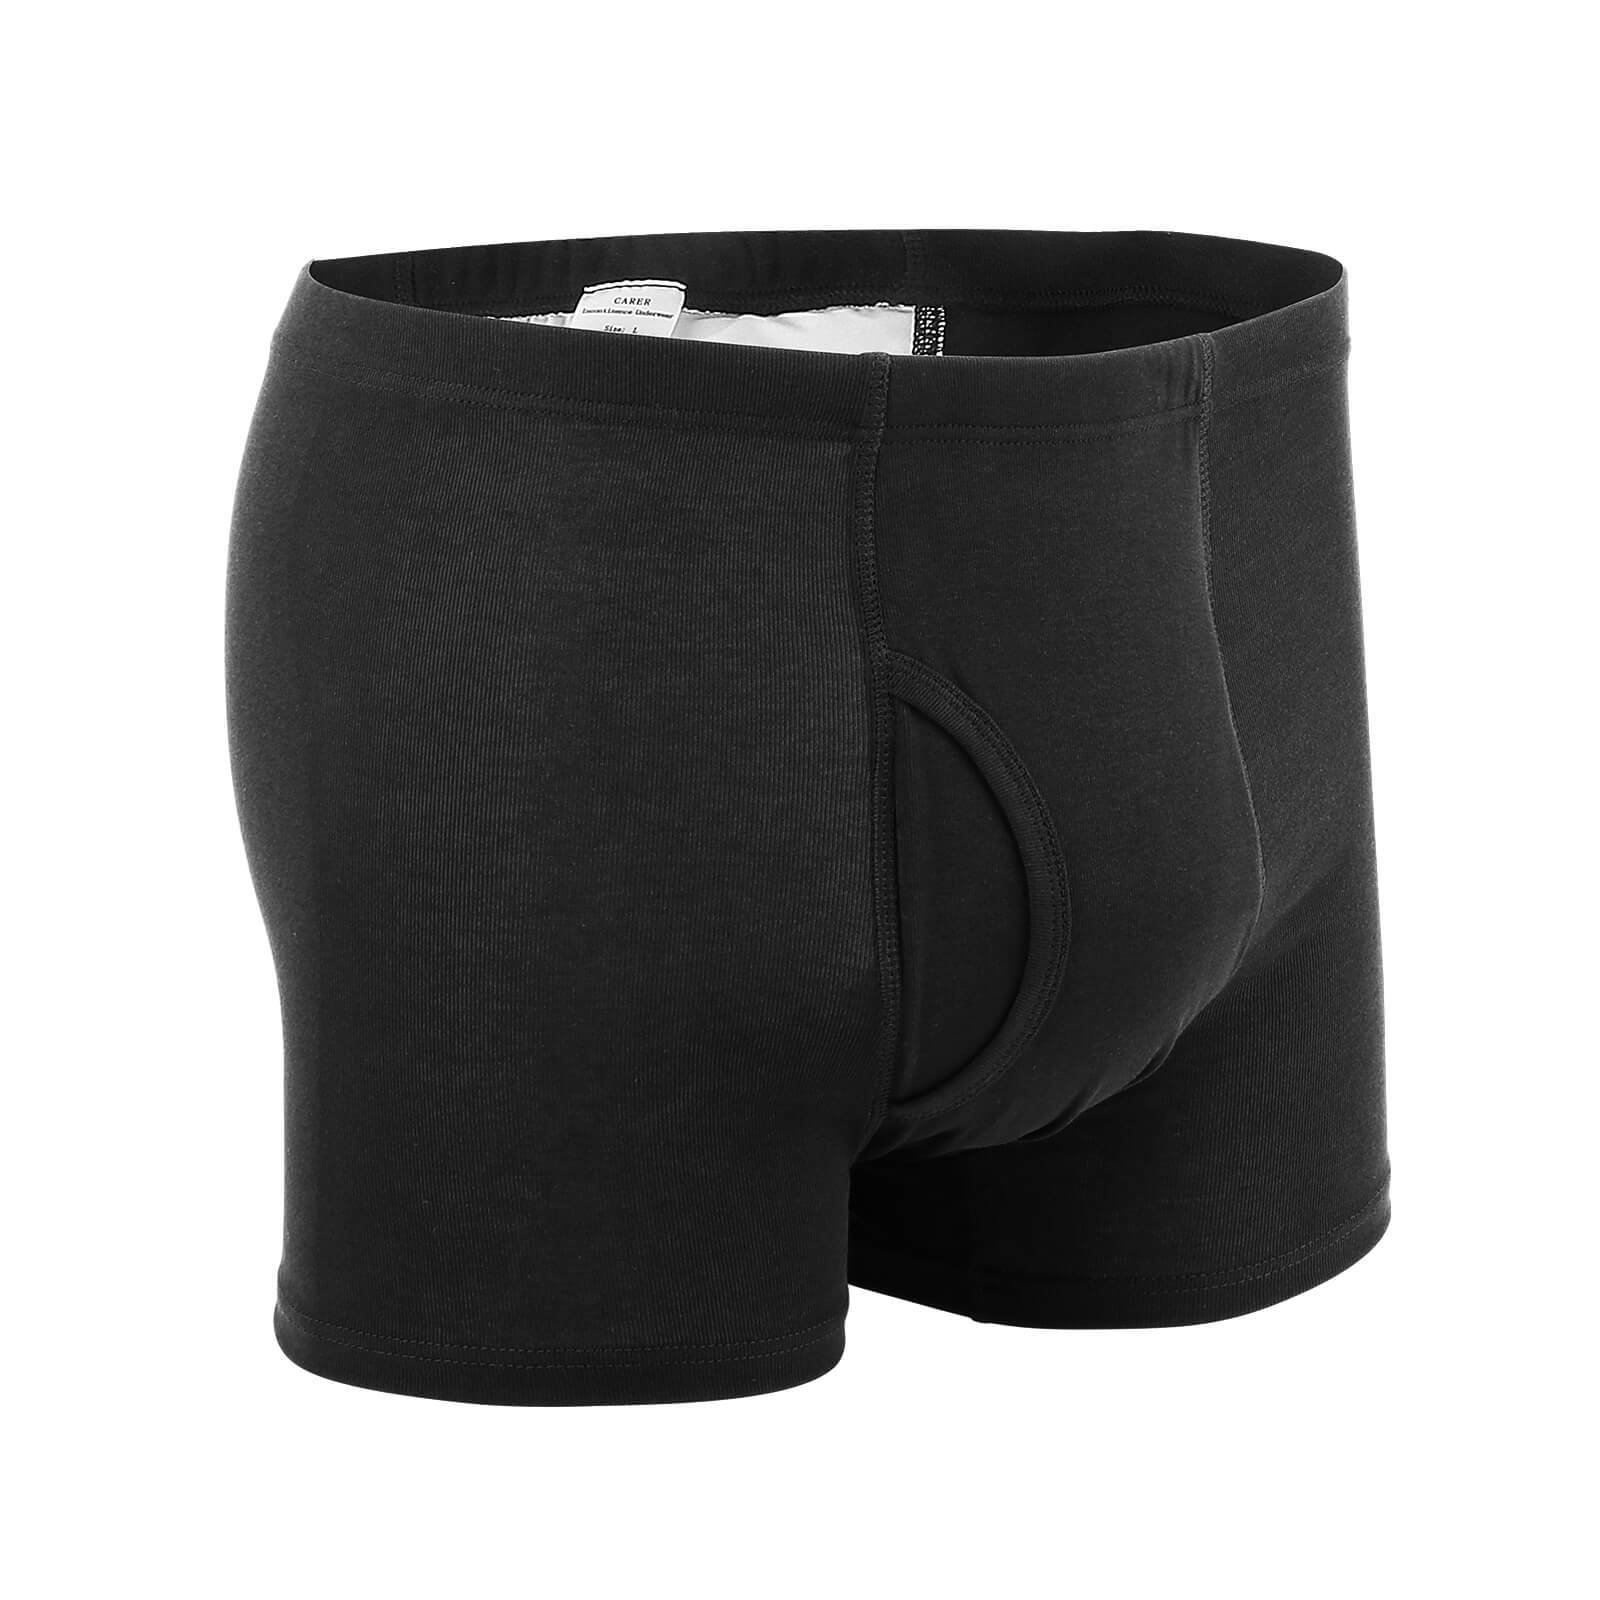 Washable Underwear For Heavy Incontinence Leakage | Men's Shorts